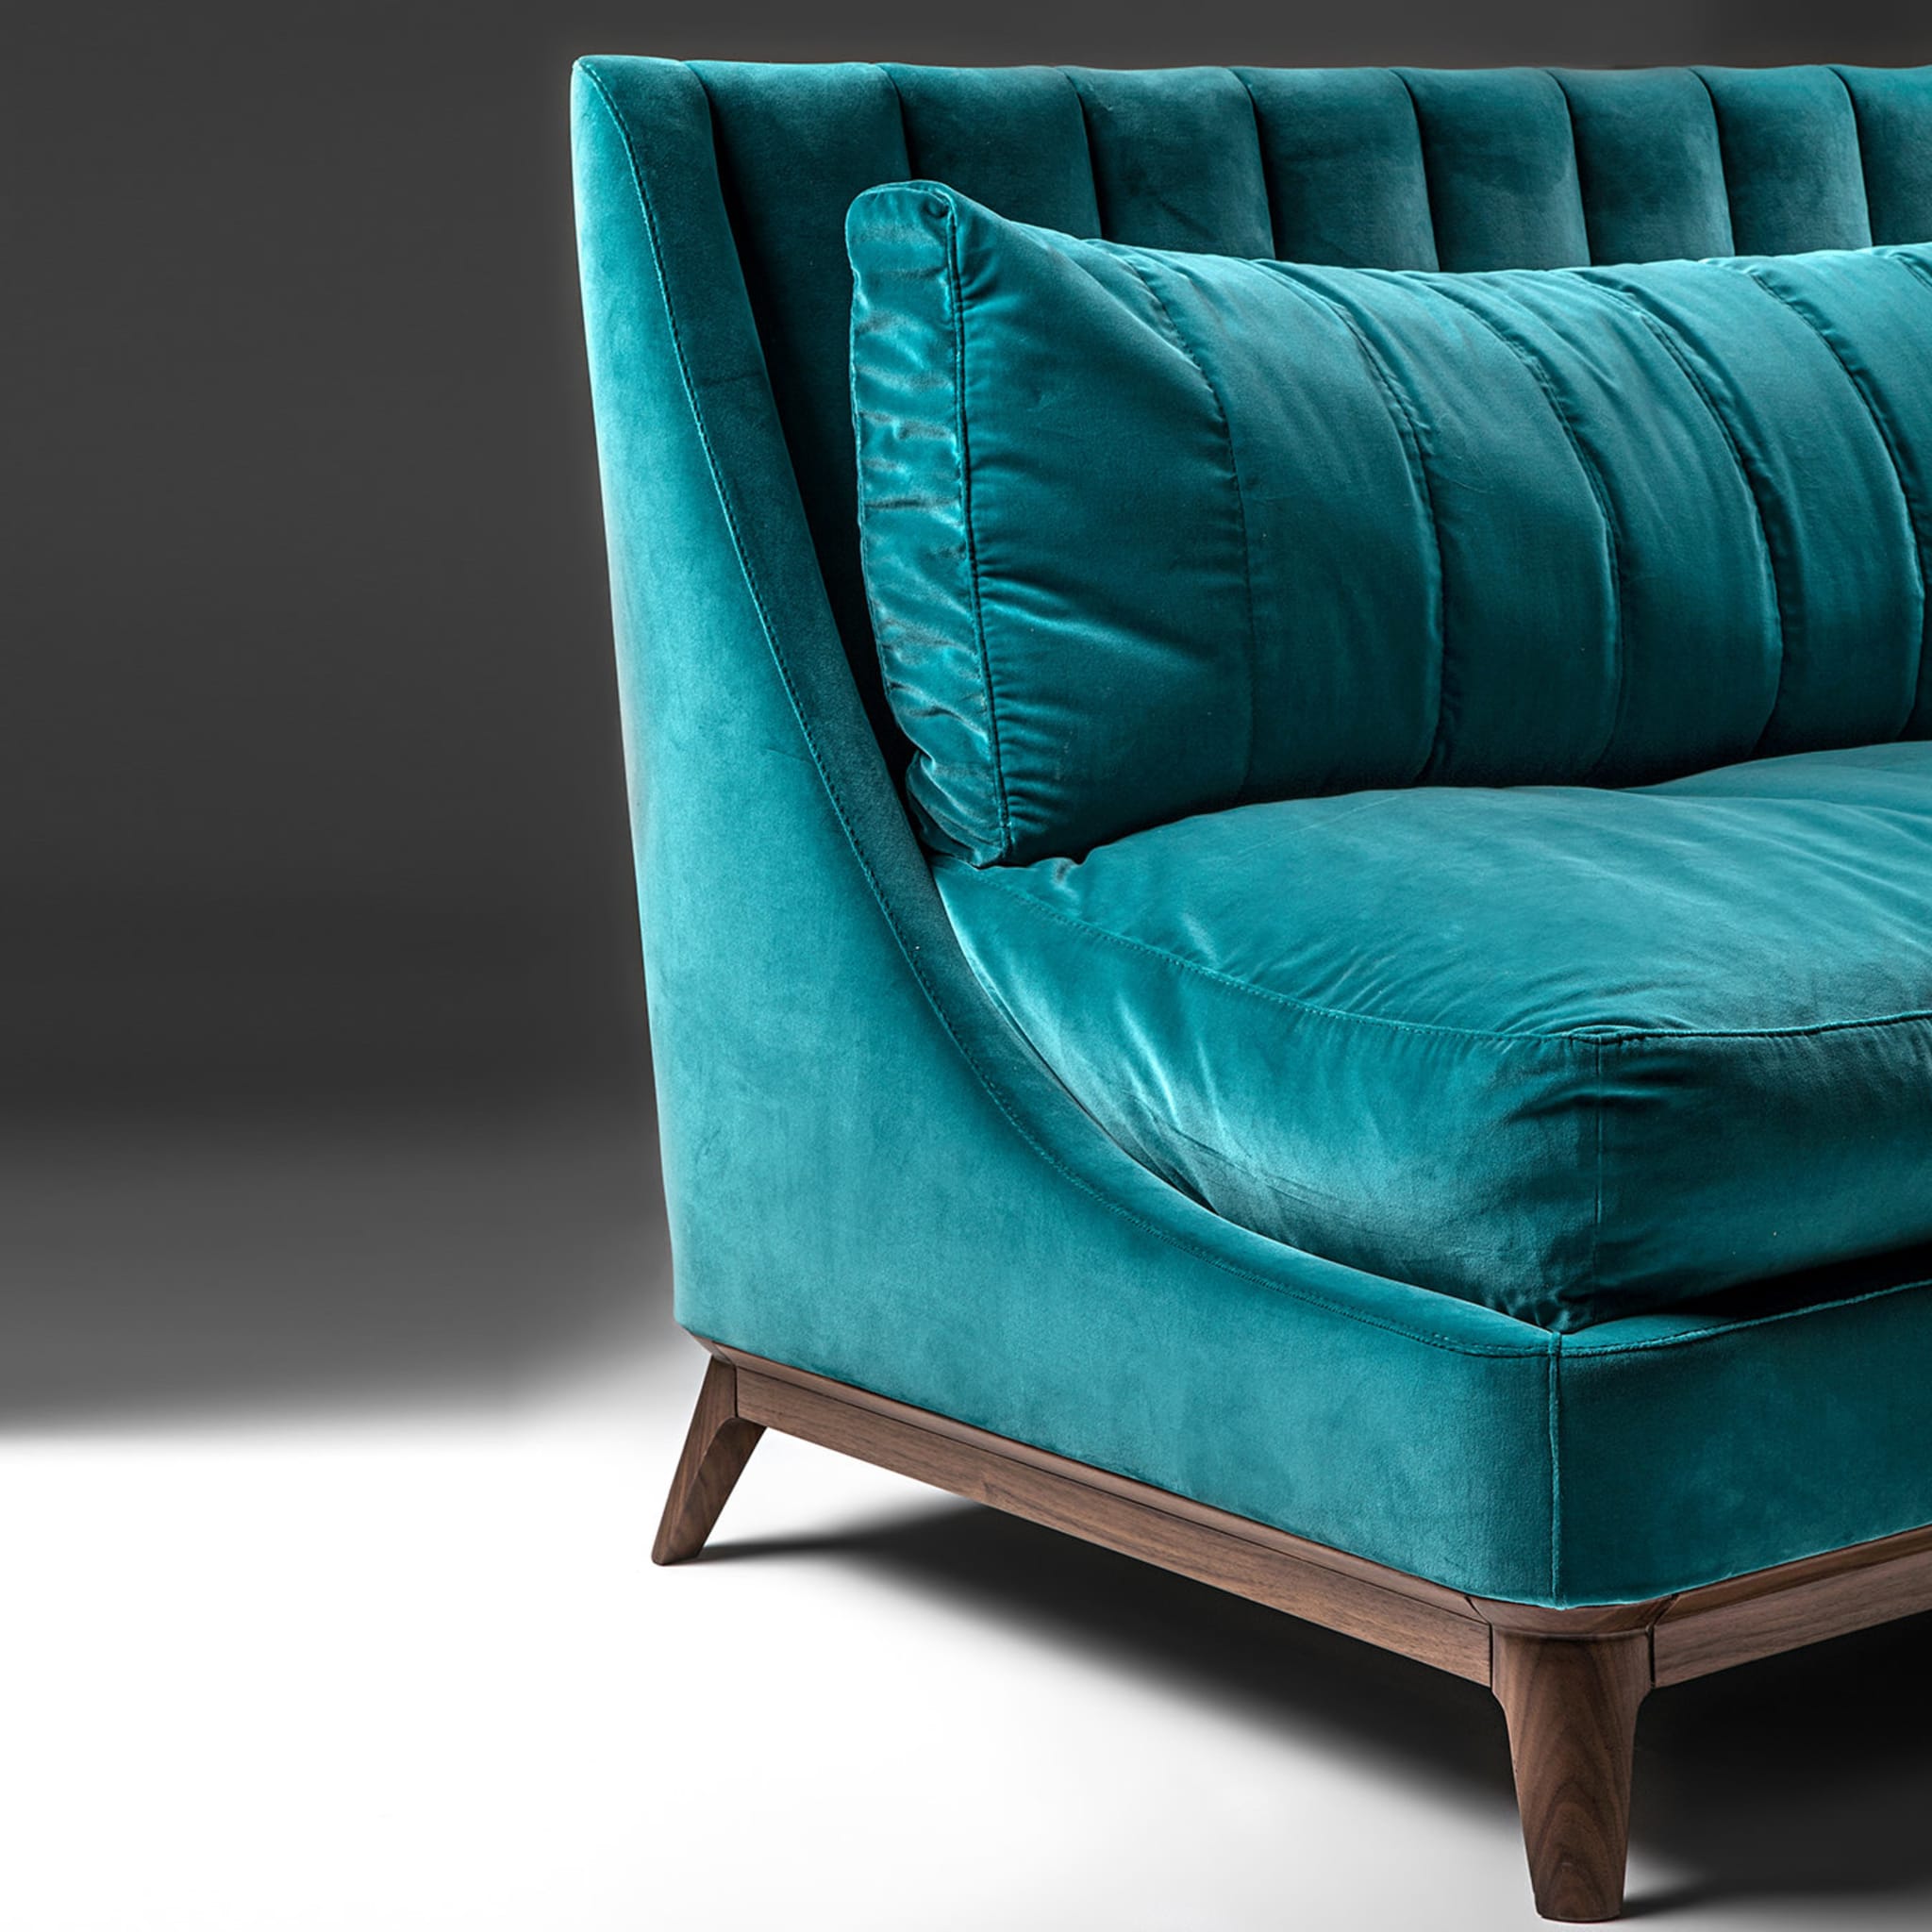 Galatea 3-Seater Sofa by Giovanna Azzarello - Alternative view 1